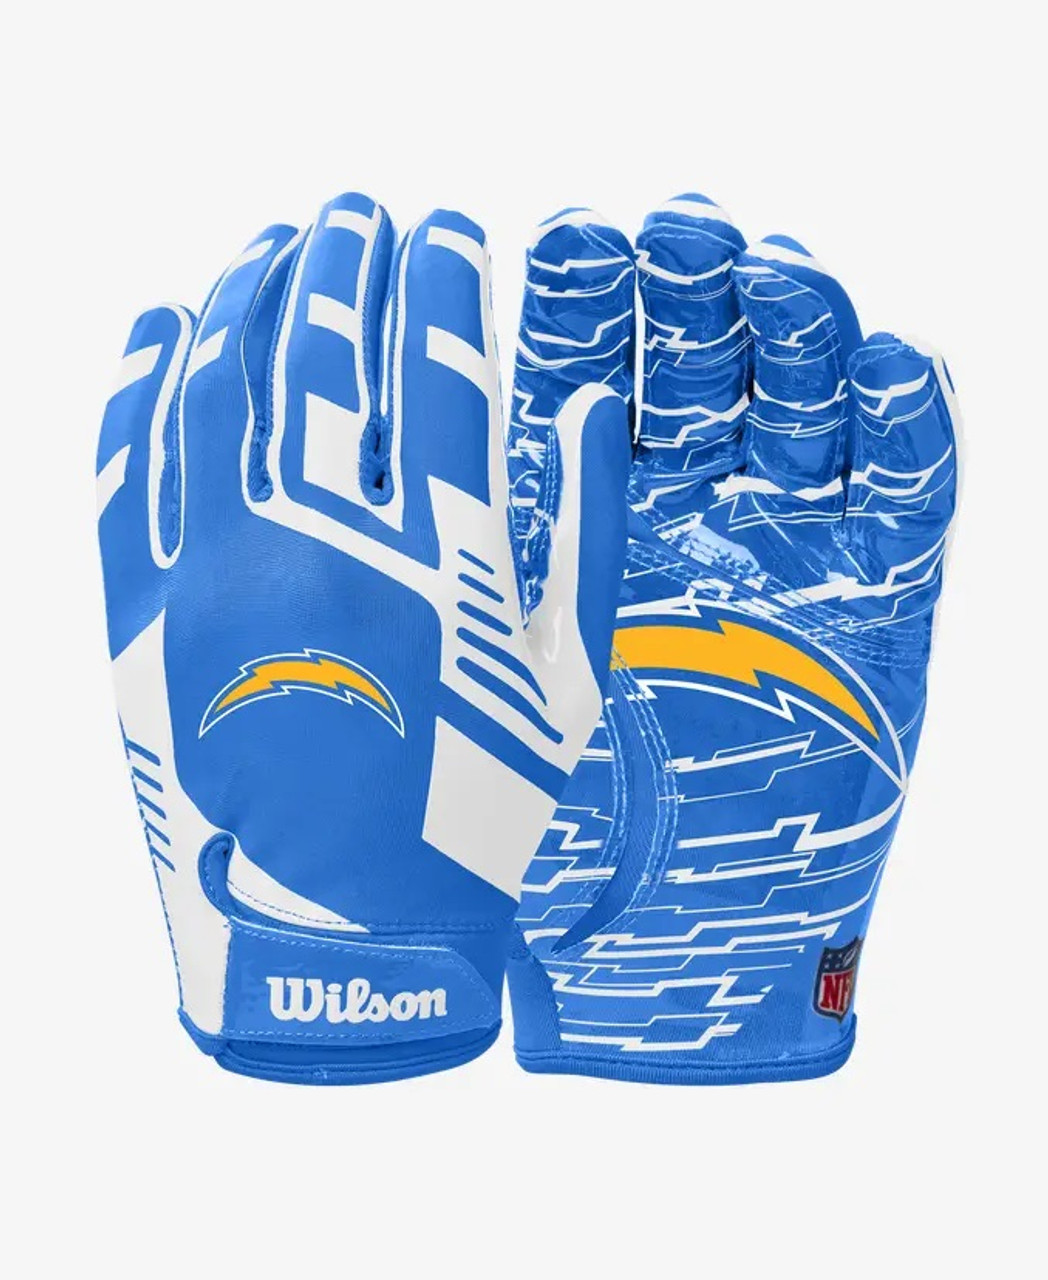 NFL, Accessories, Las Vegas Raiders Gloves